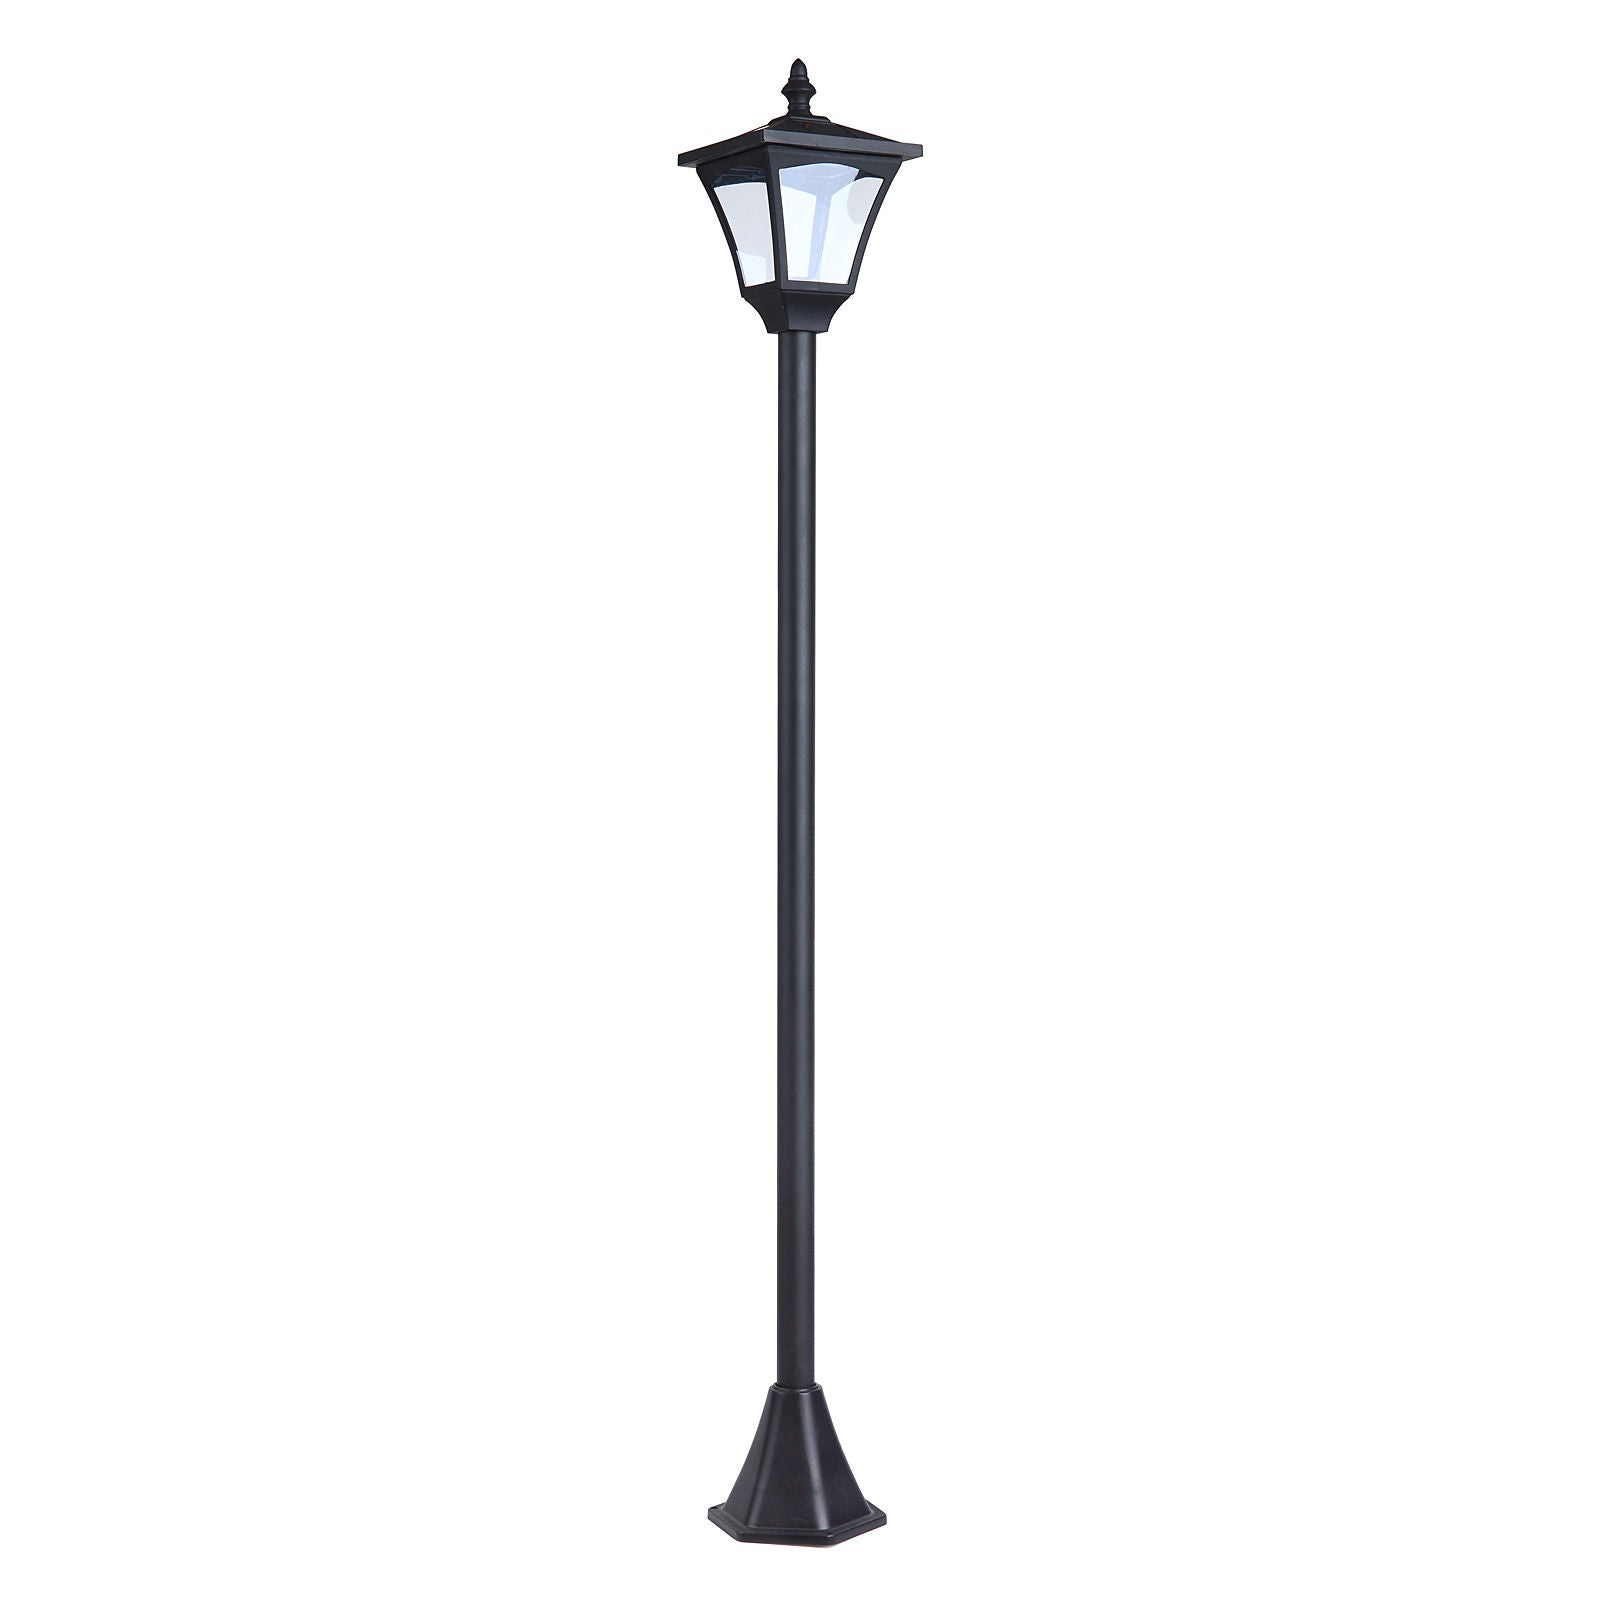 Nancy's Davis Bank Garden Lantern - Garden Lighting - Lamppost - Black - Plastic